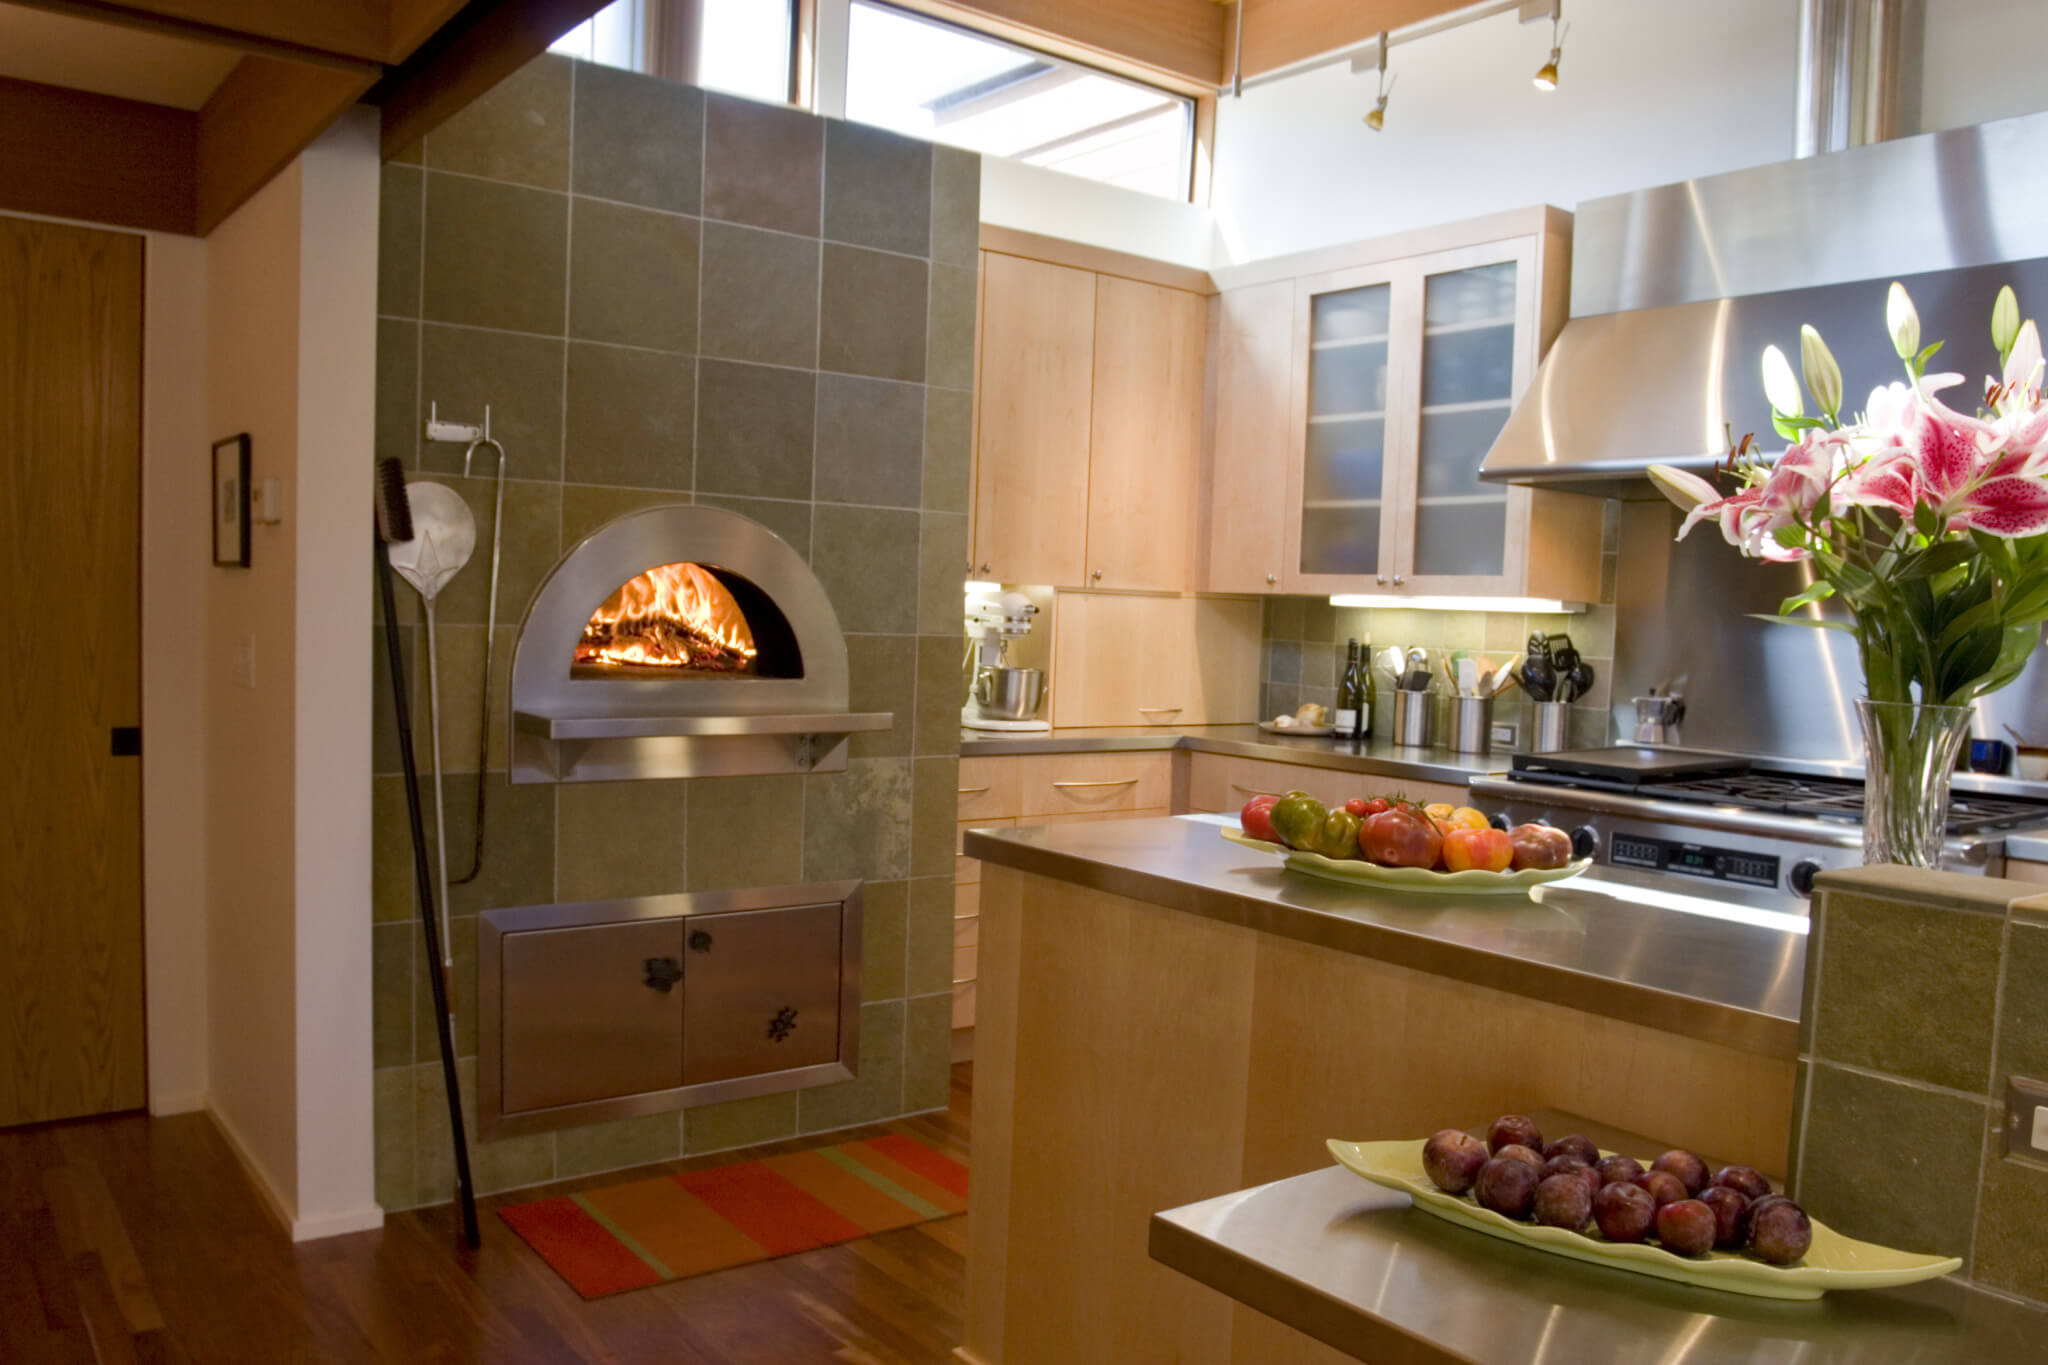 Mugnaini oven in residential kitchen